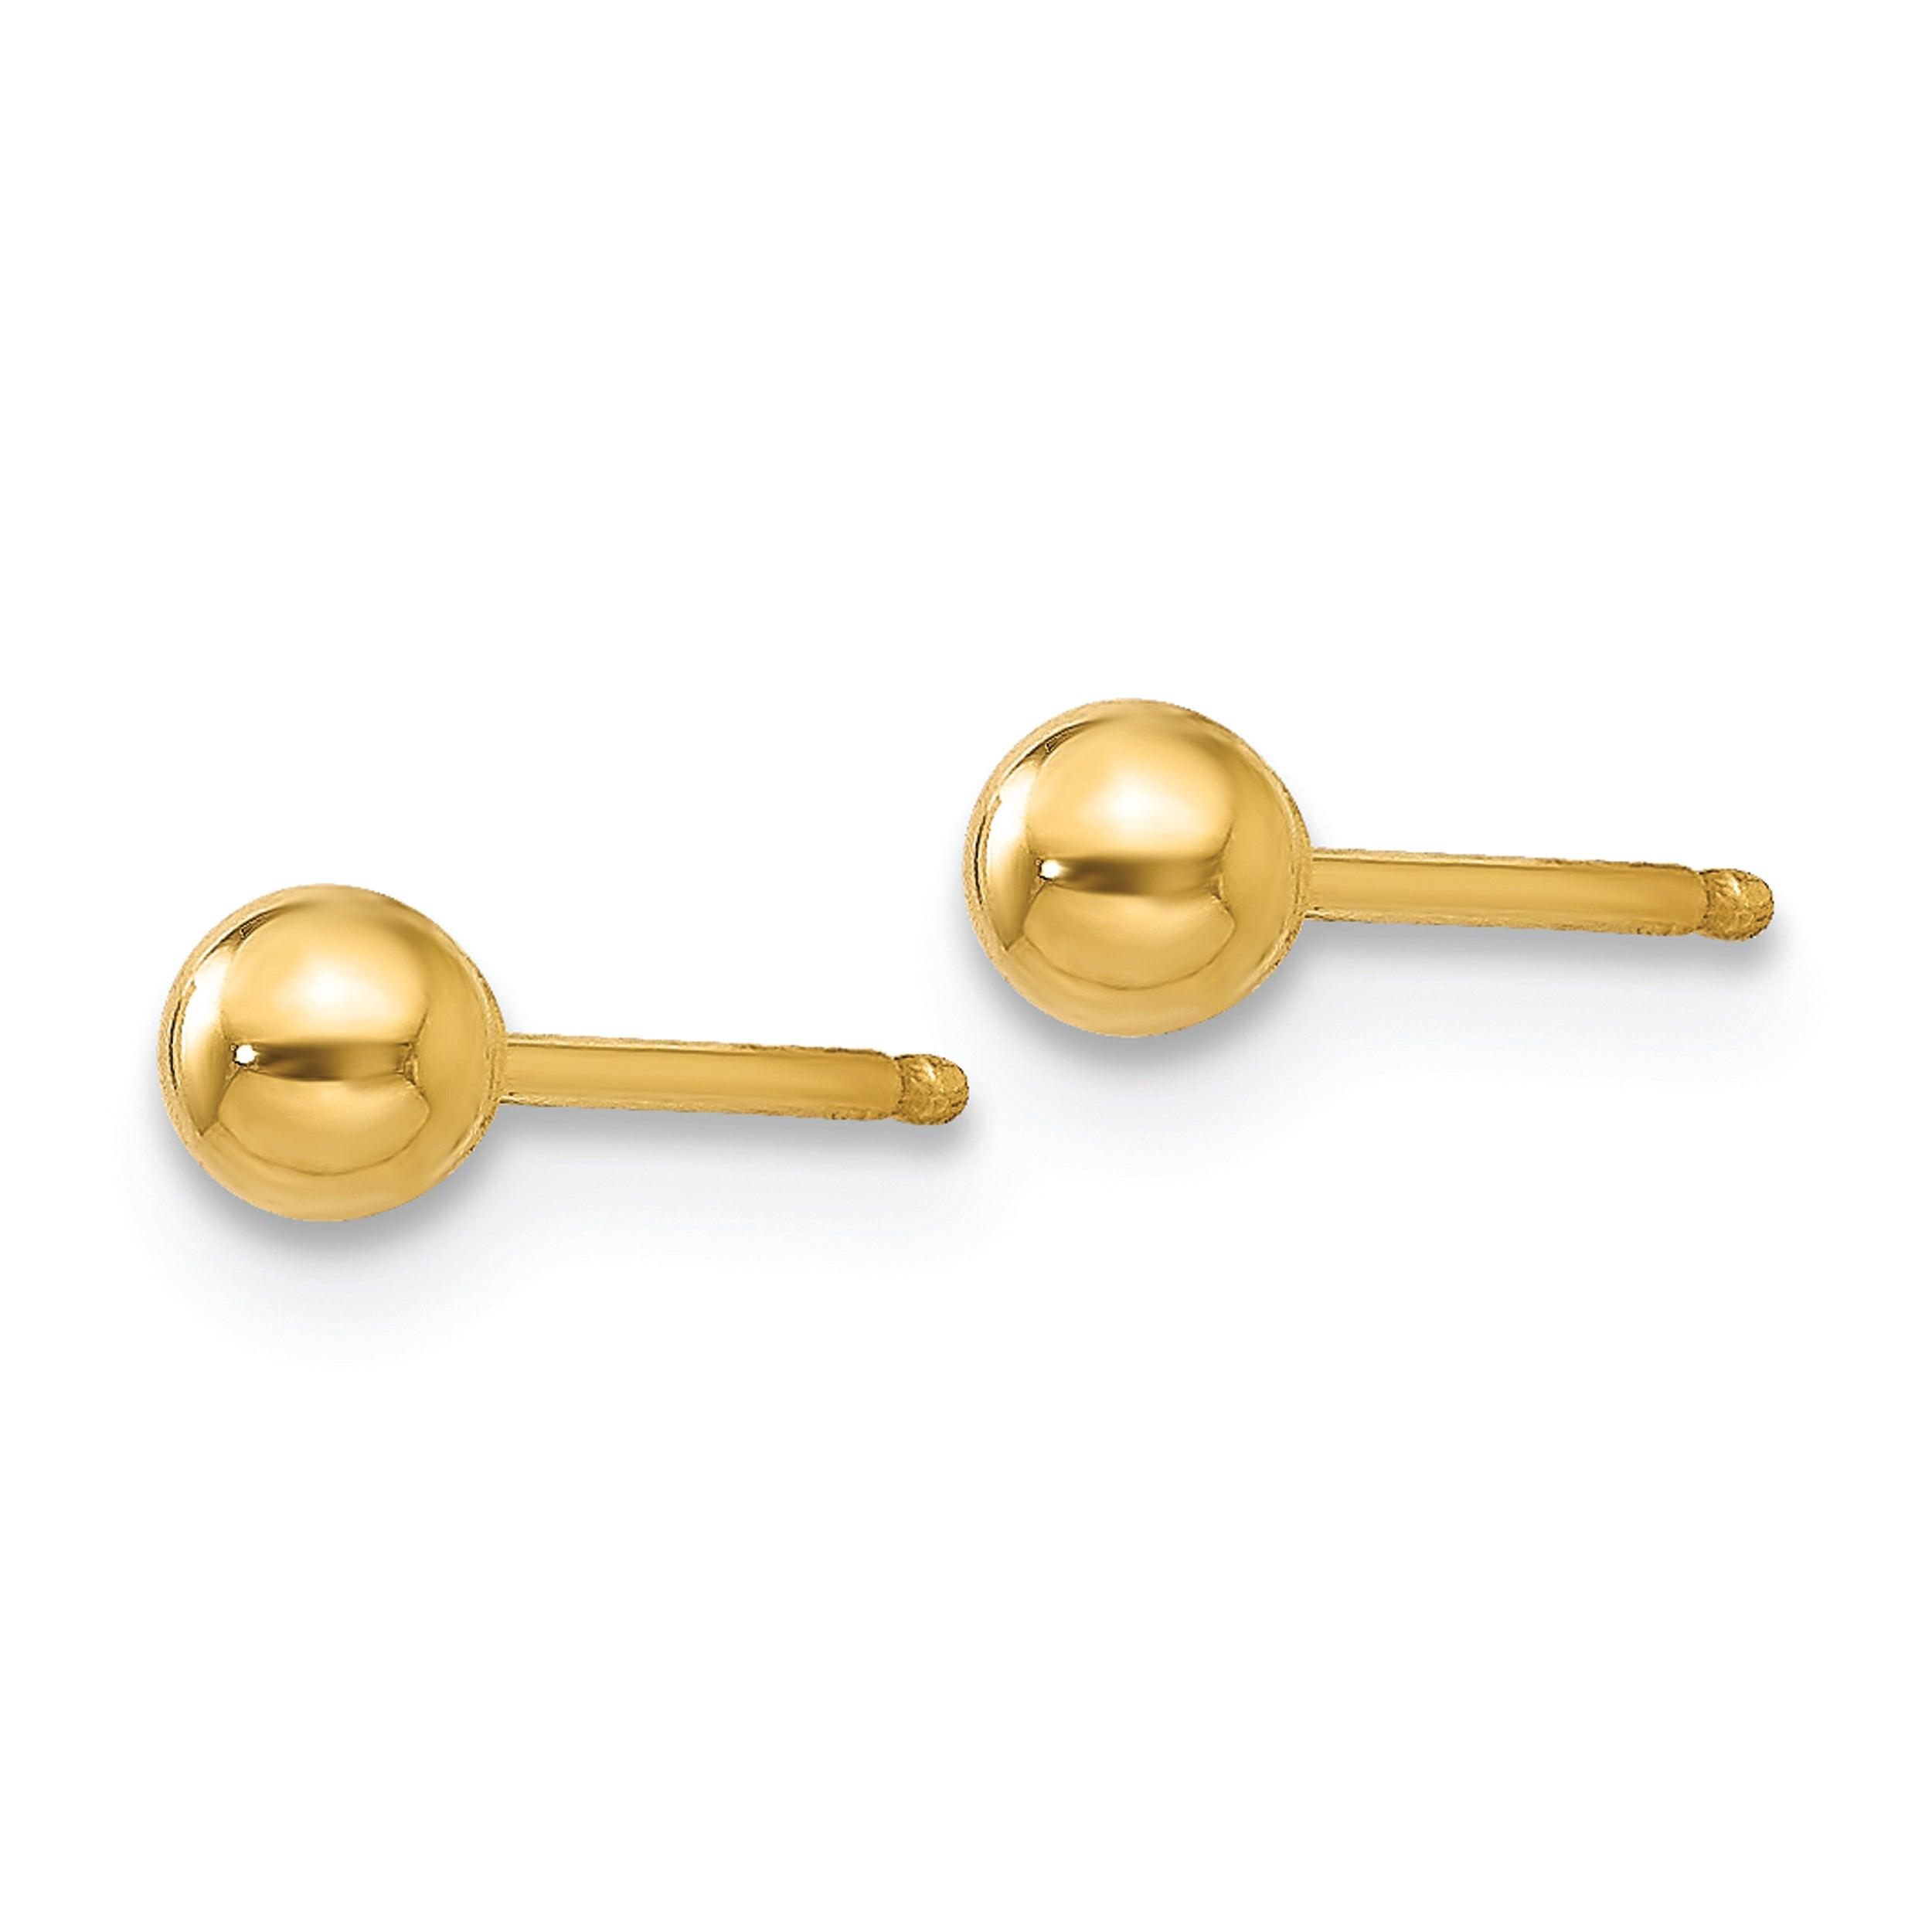 Quality Gold Earrings 14k Polished 3mm Ball Post Earrings